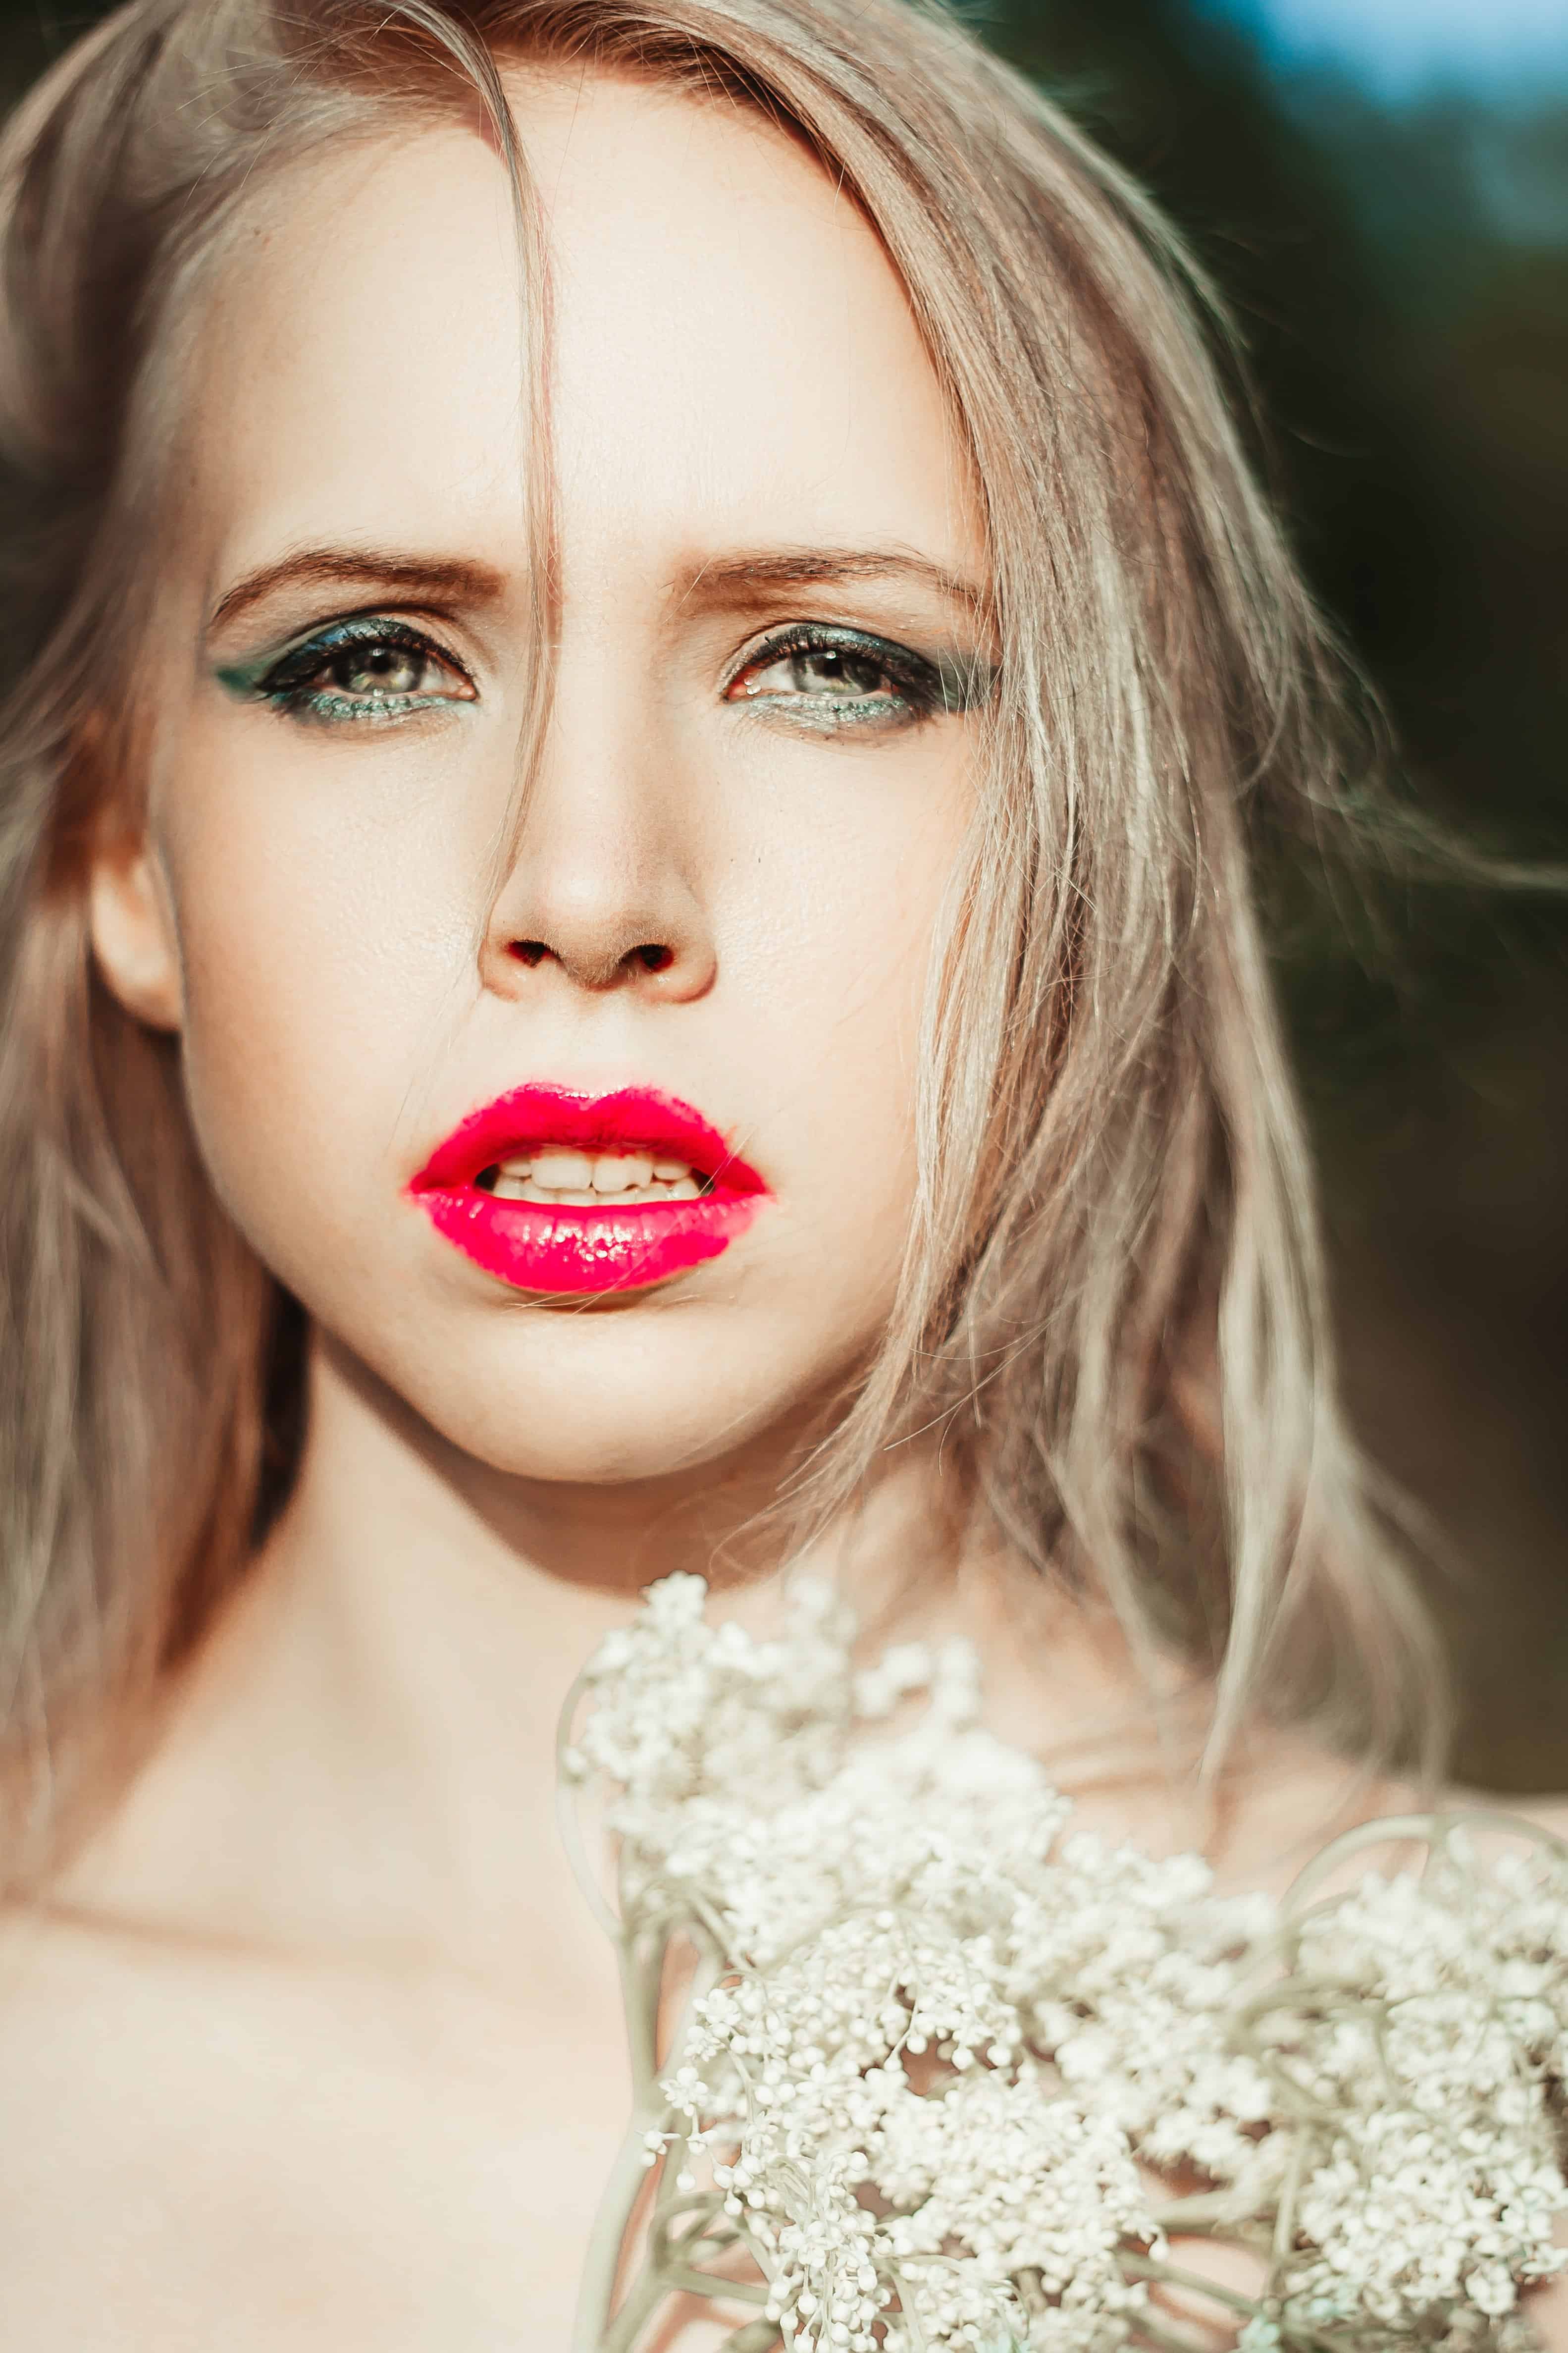 Free picture lipstick woman  photo model  blonde hair fashion face portrait makeup 